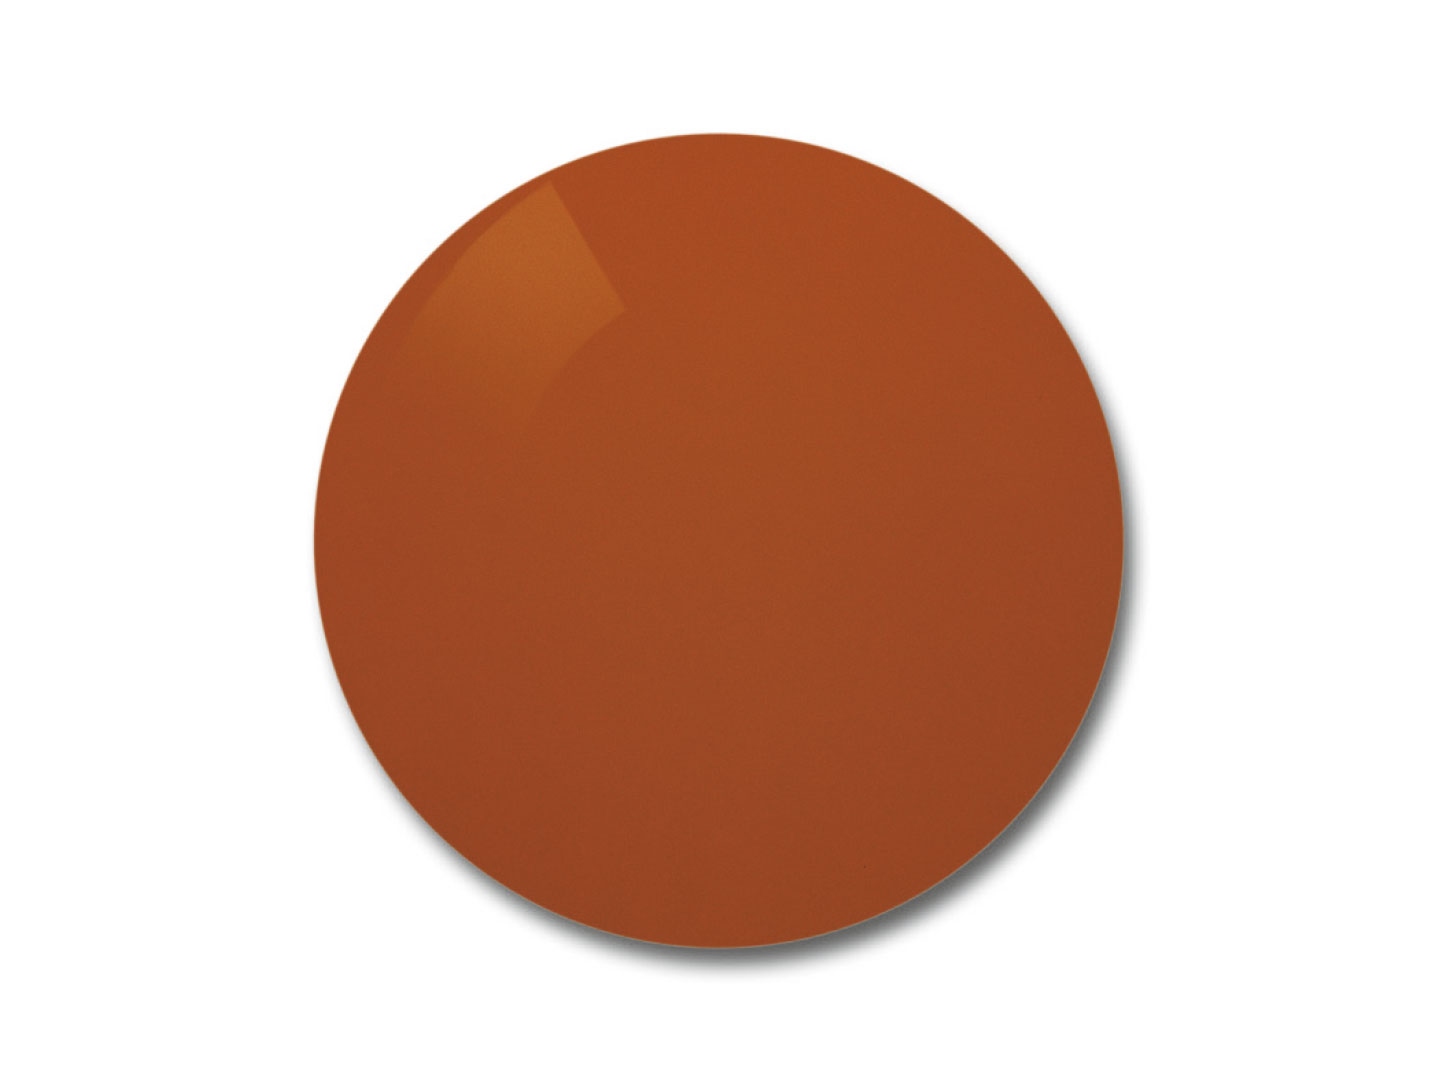 Illustration de verres Skylet® Fun de ZEISS à teinte marron-orange